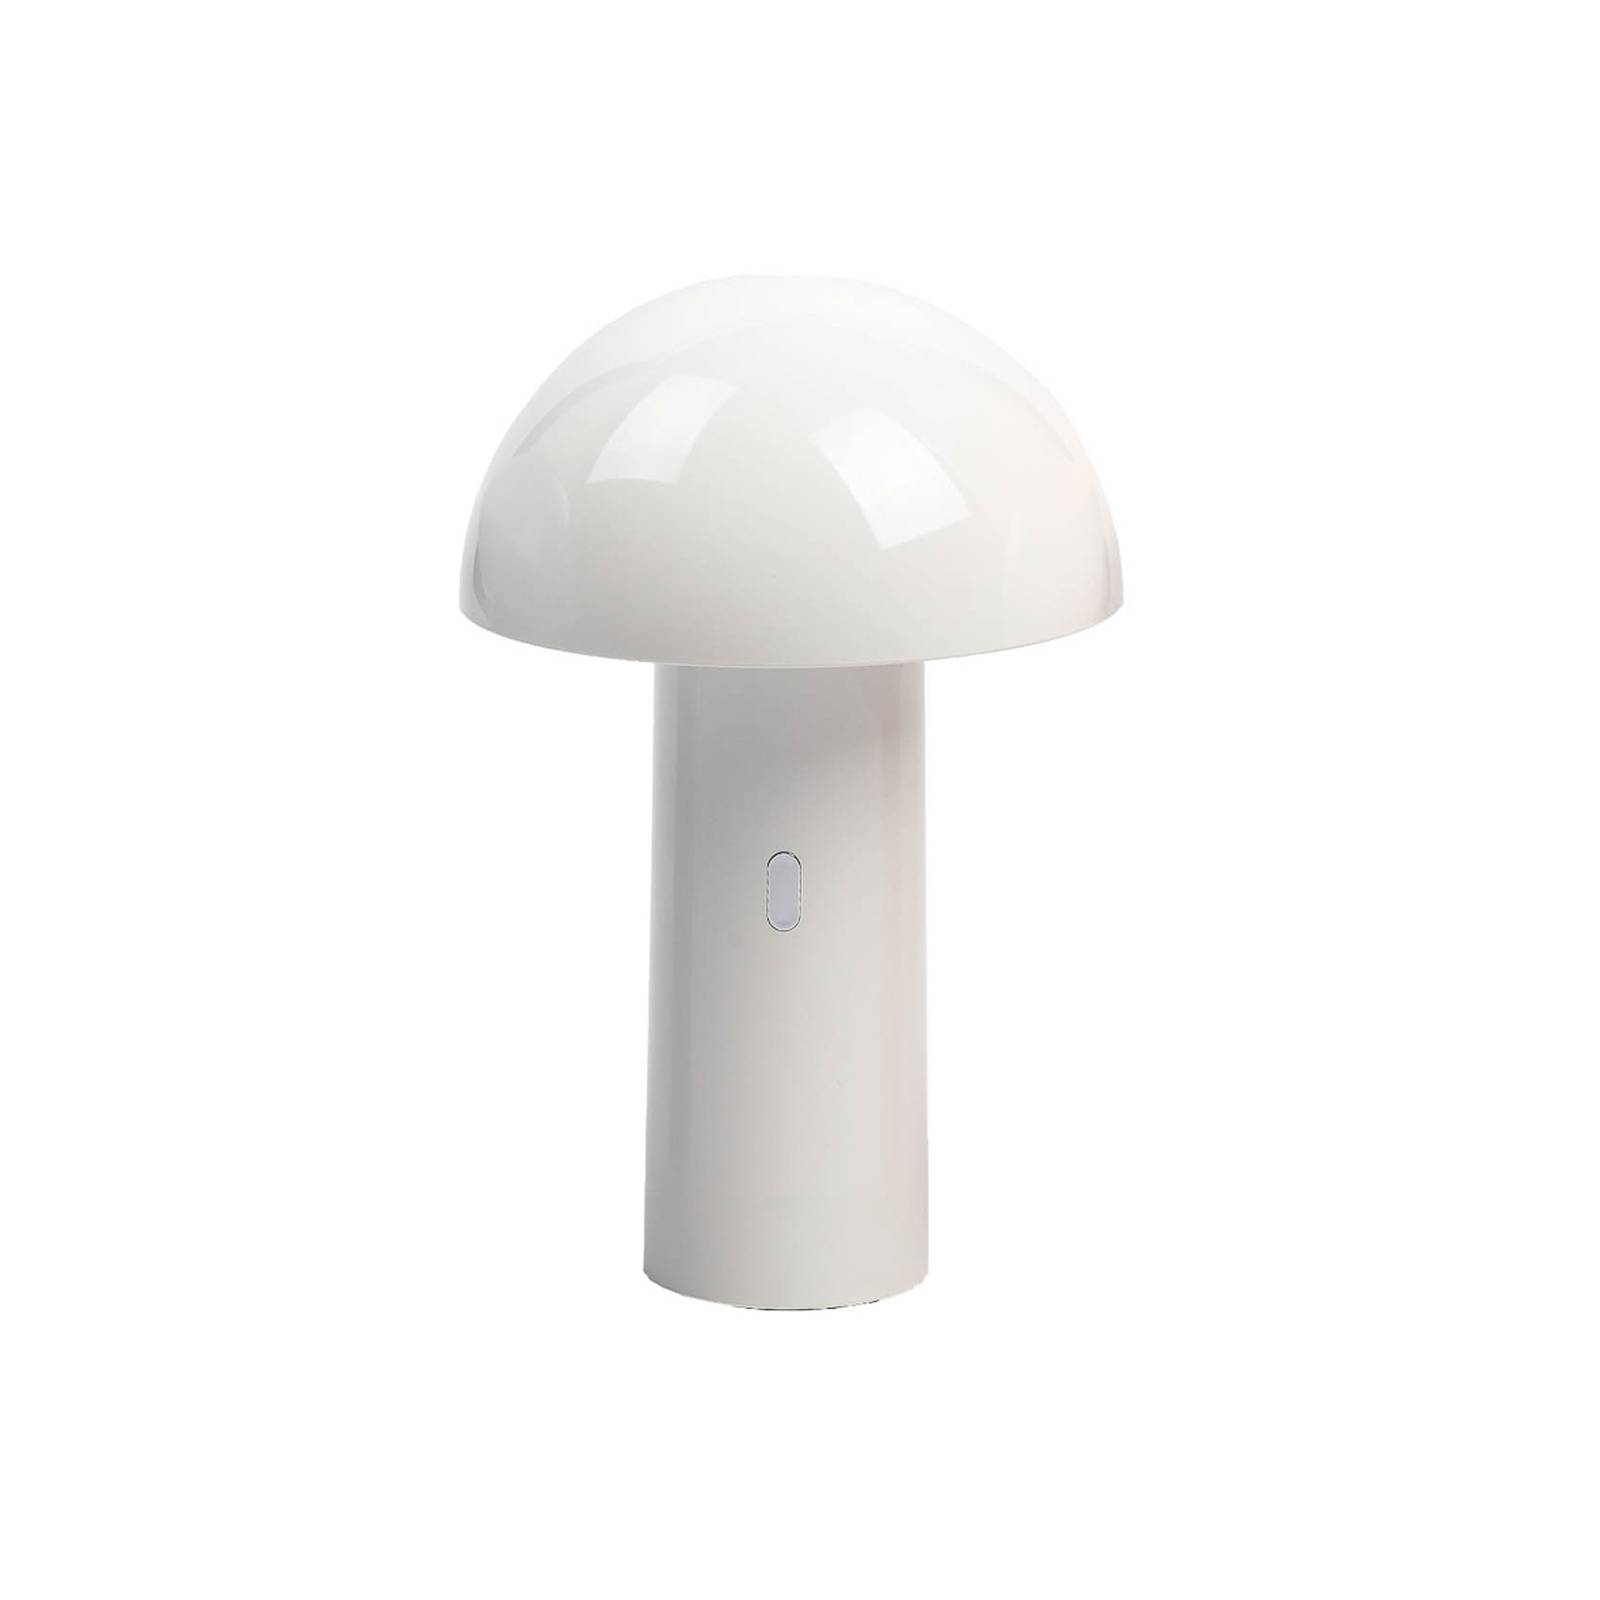 Aluminor Capsule LED asztali lámpa, mobil, fehér